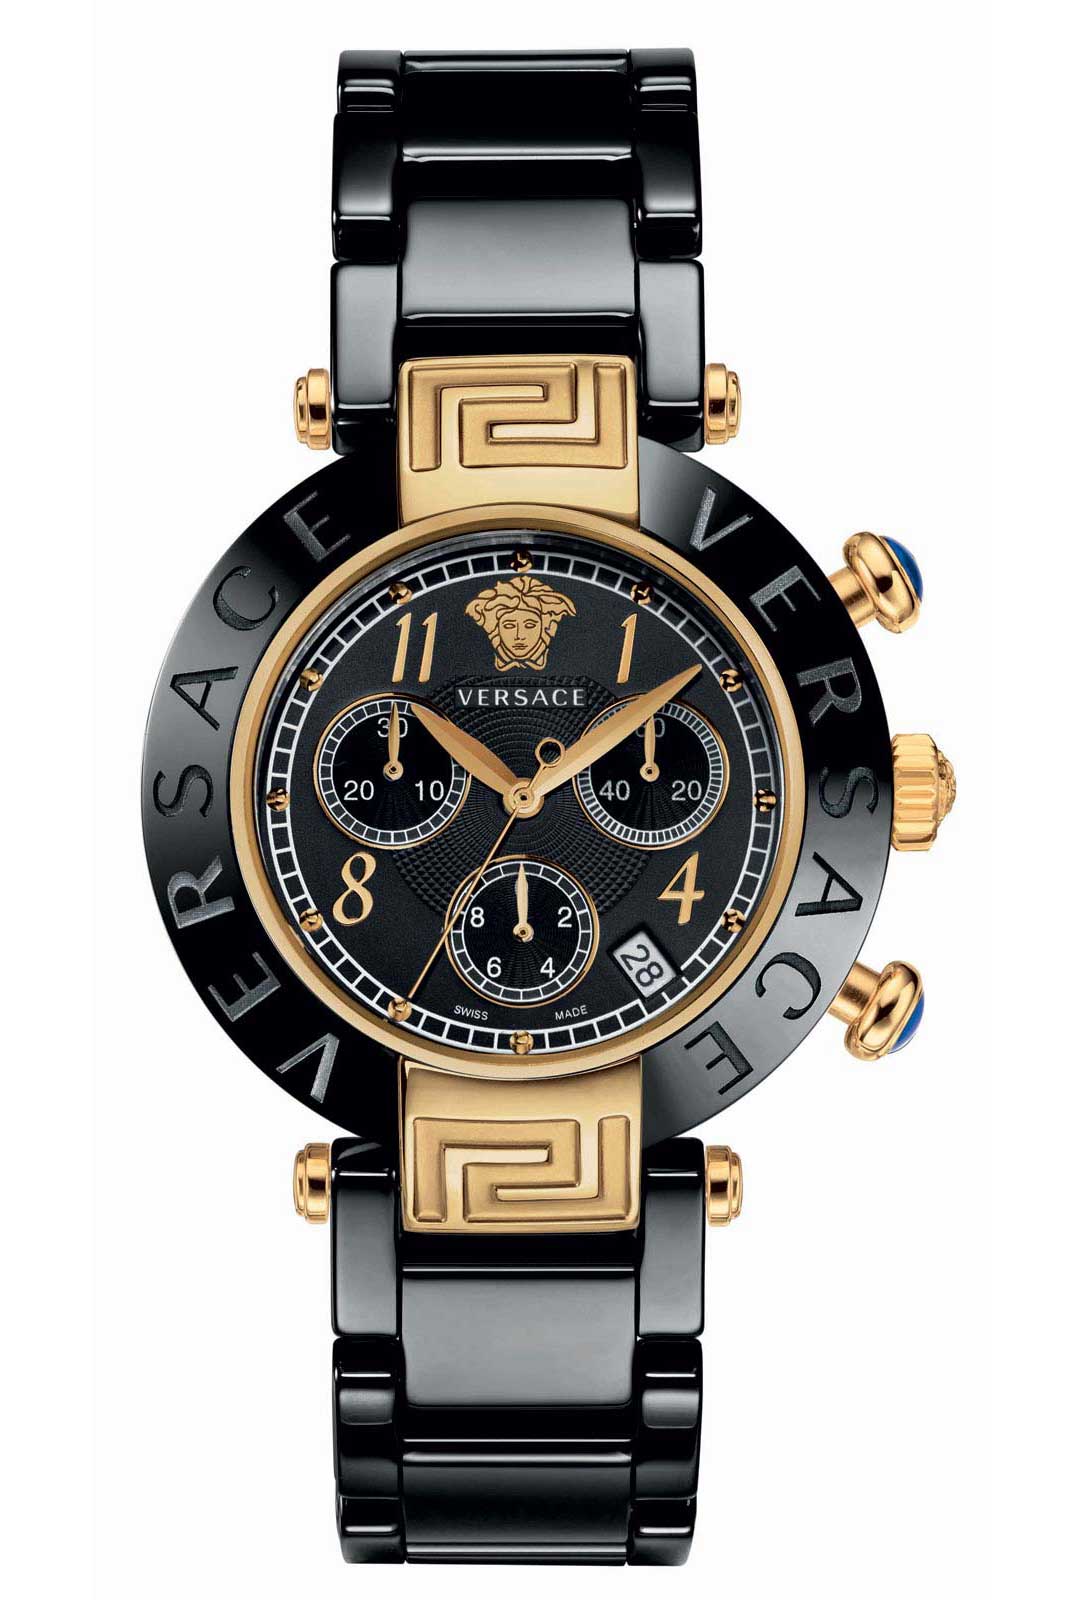 Versace QUARTZ CHRONO watch 5040D STEEL GOLD